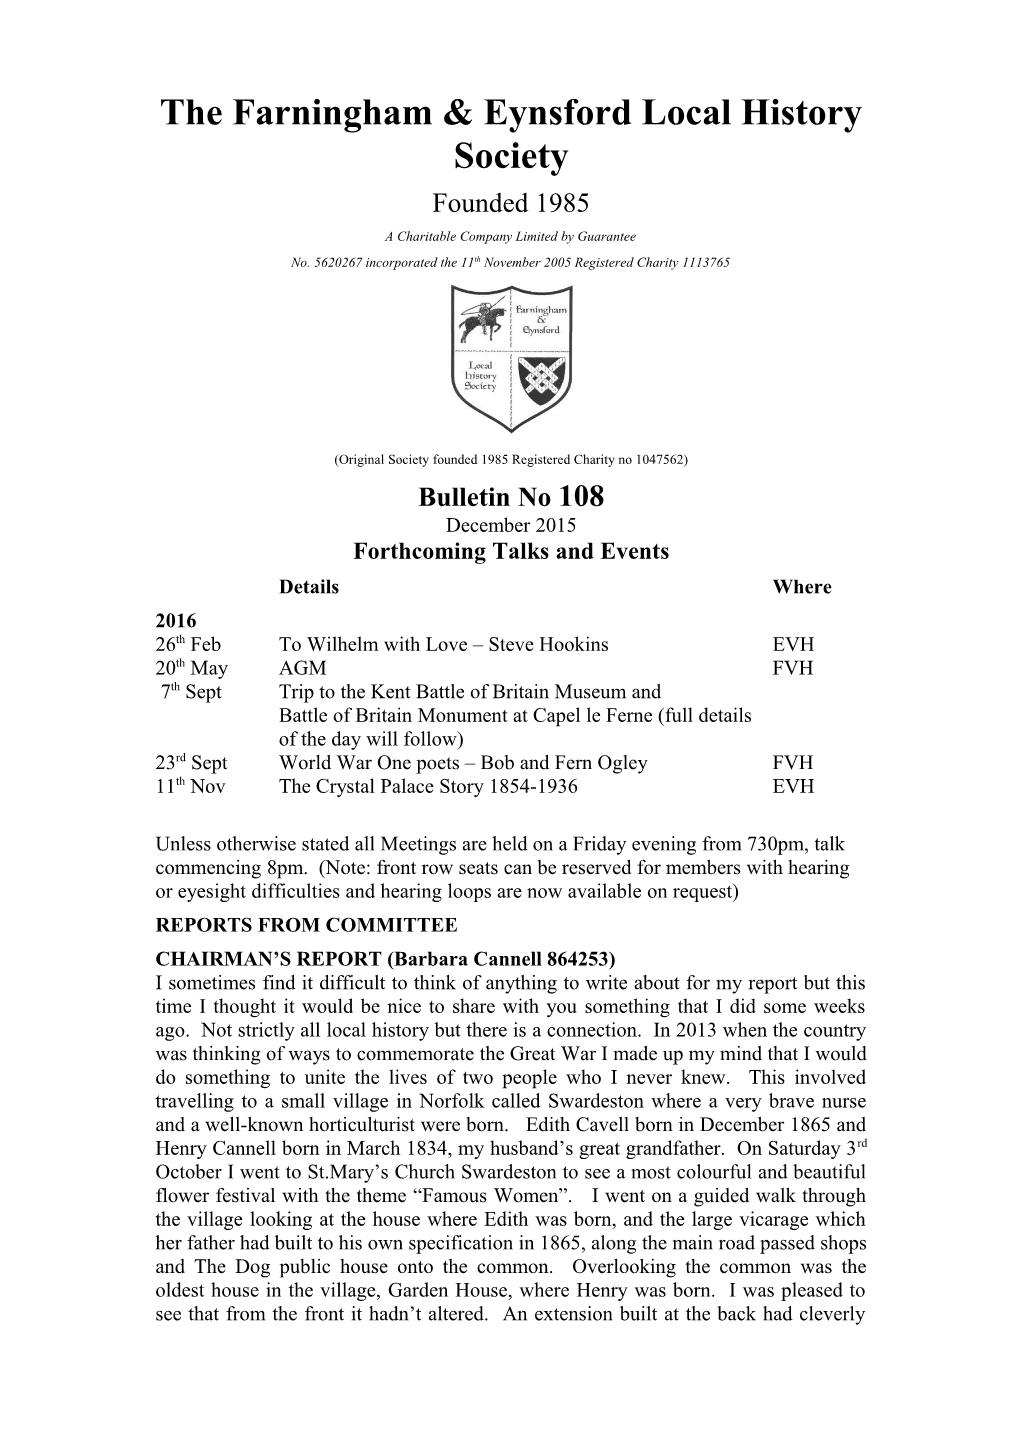 The Farningham & Eynsford Local History Society